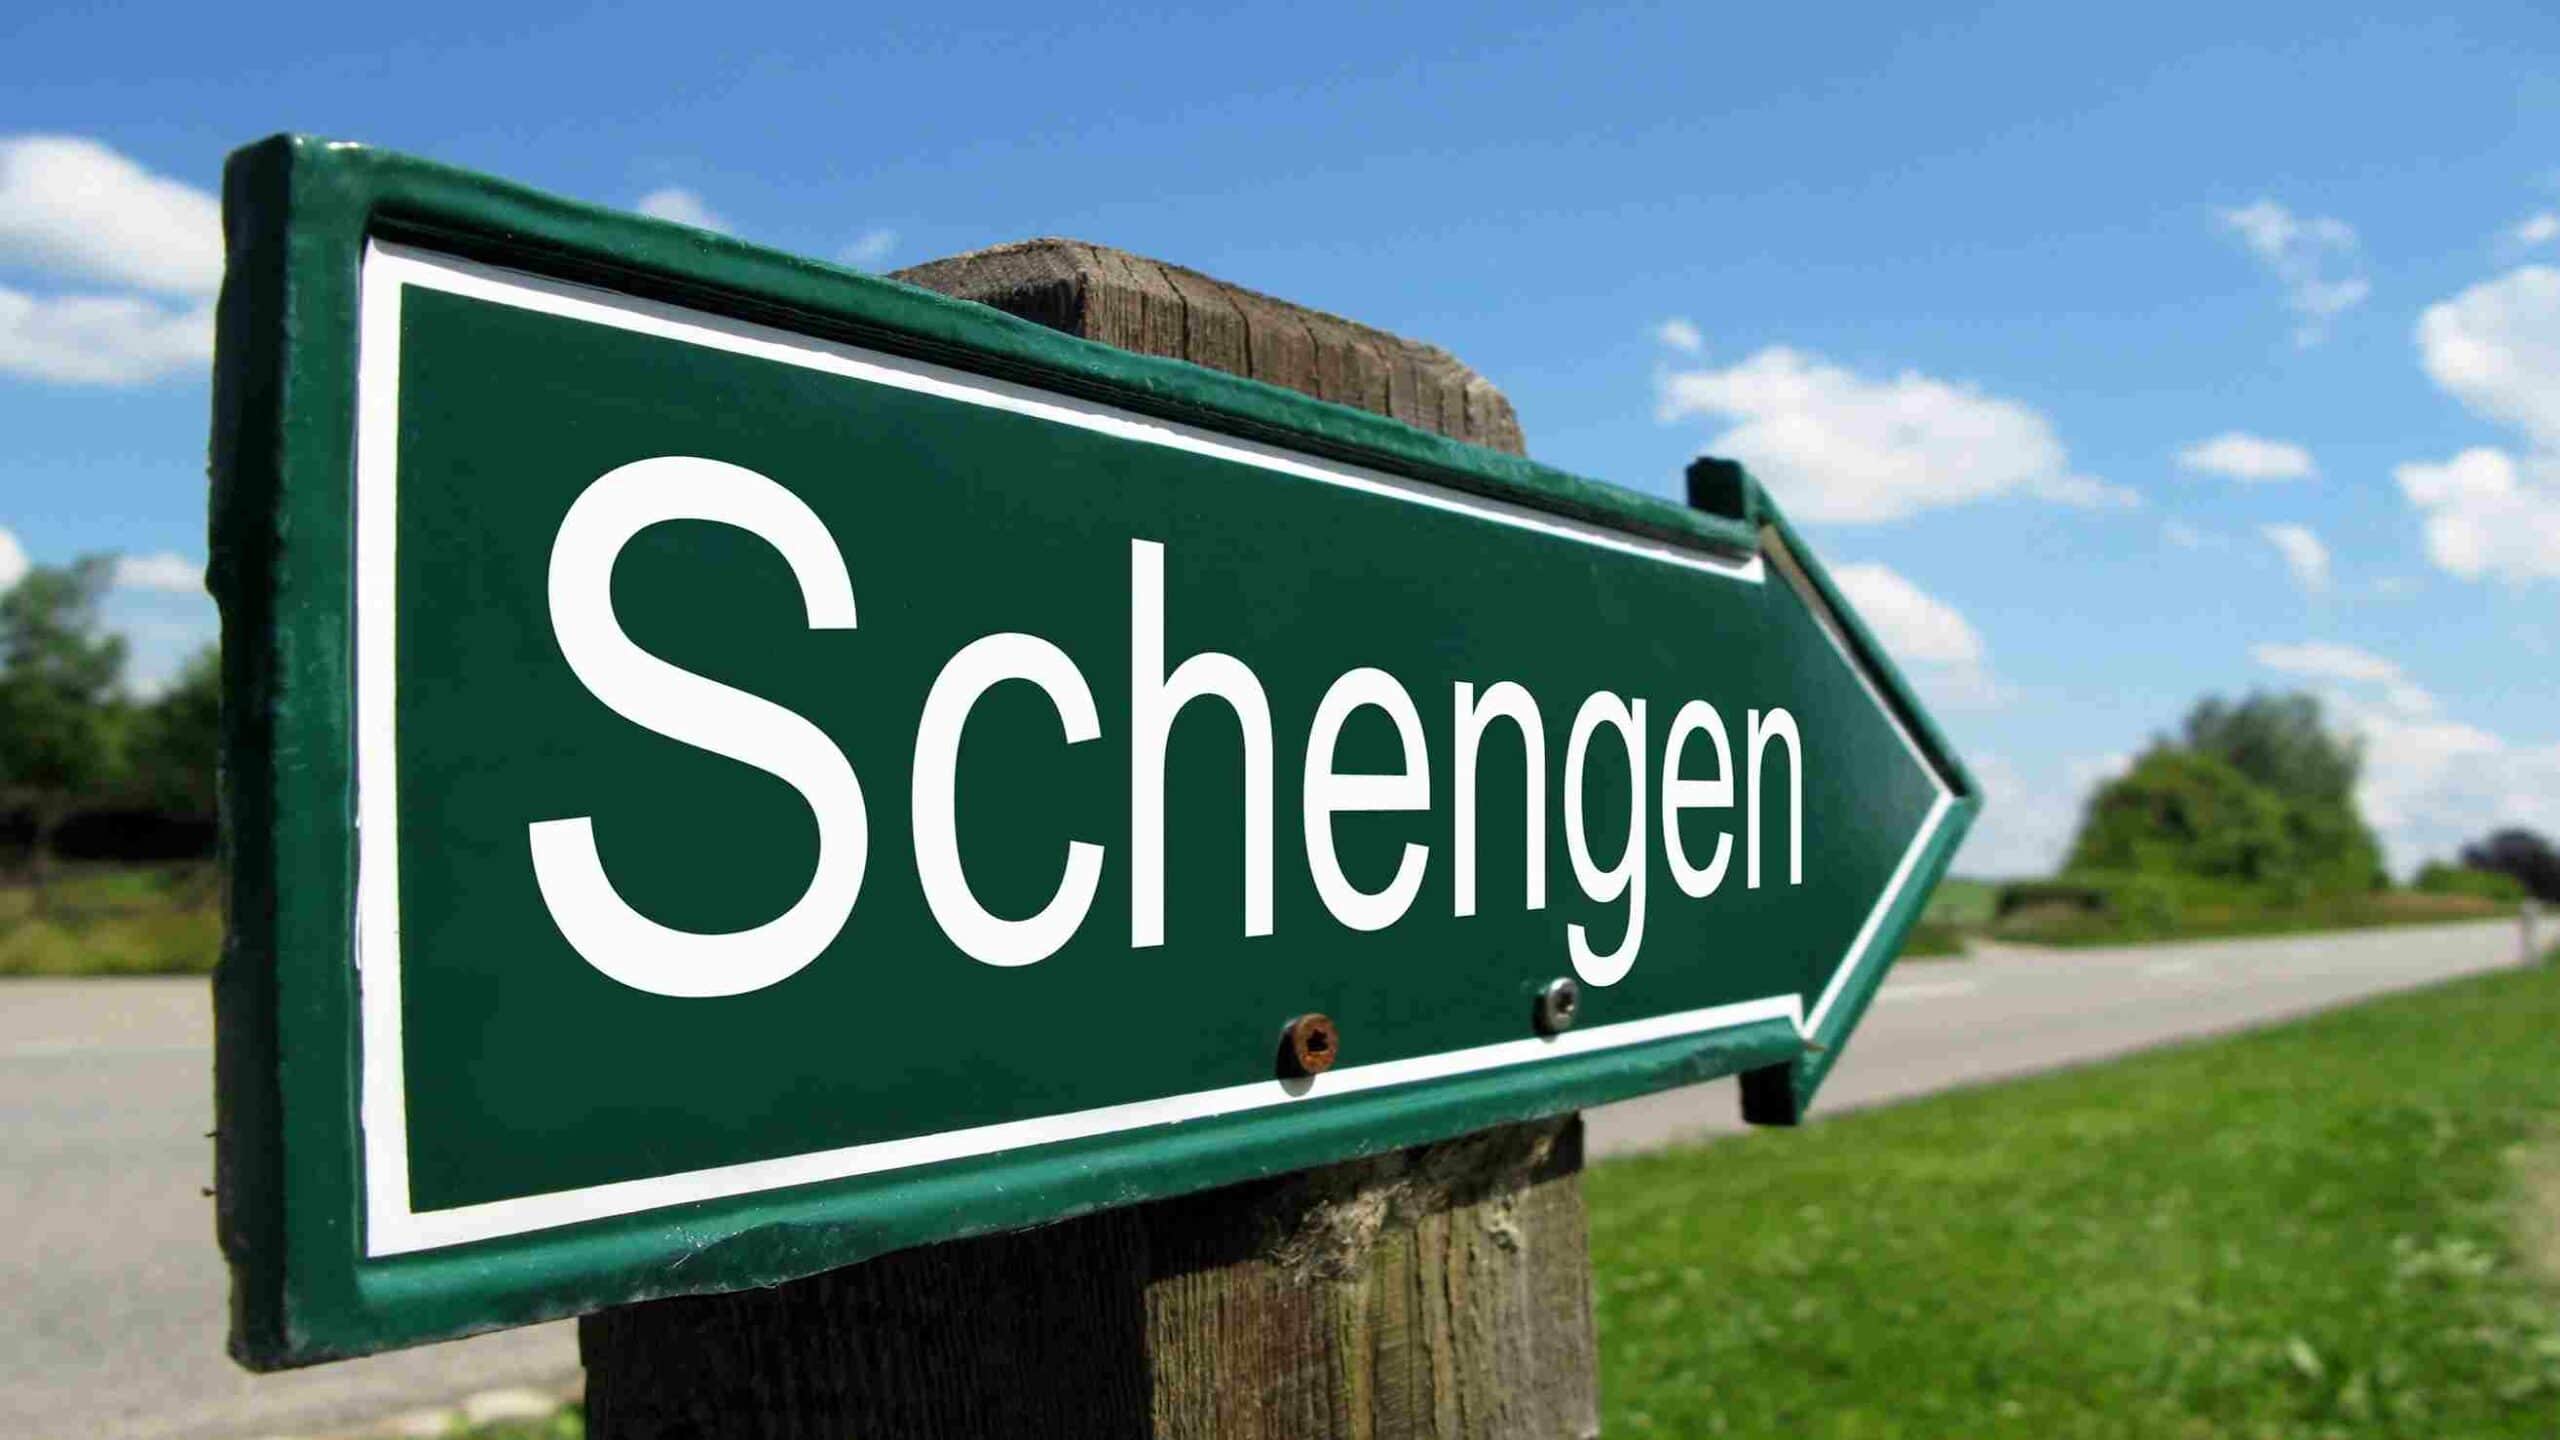 Síp gia nhập Schengen 2020